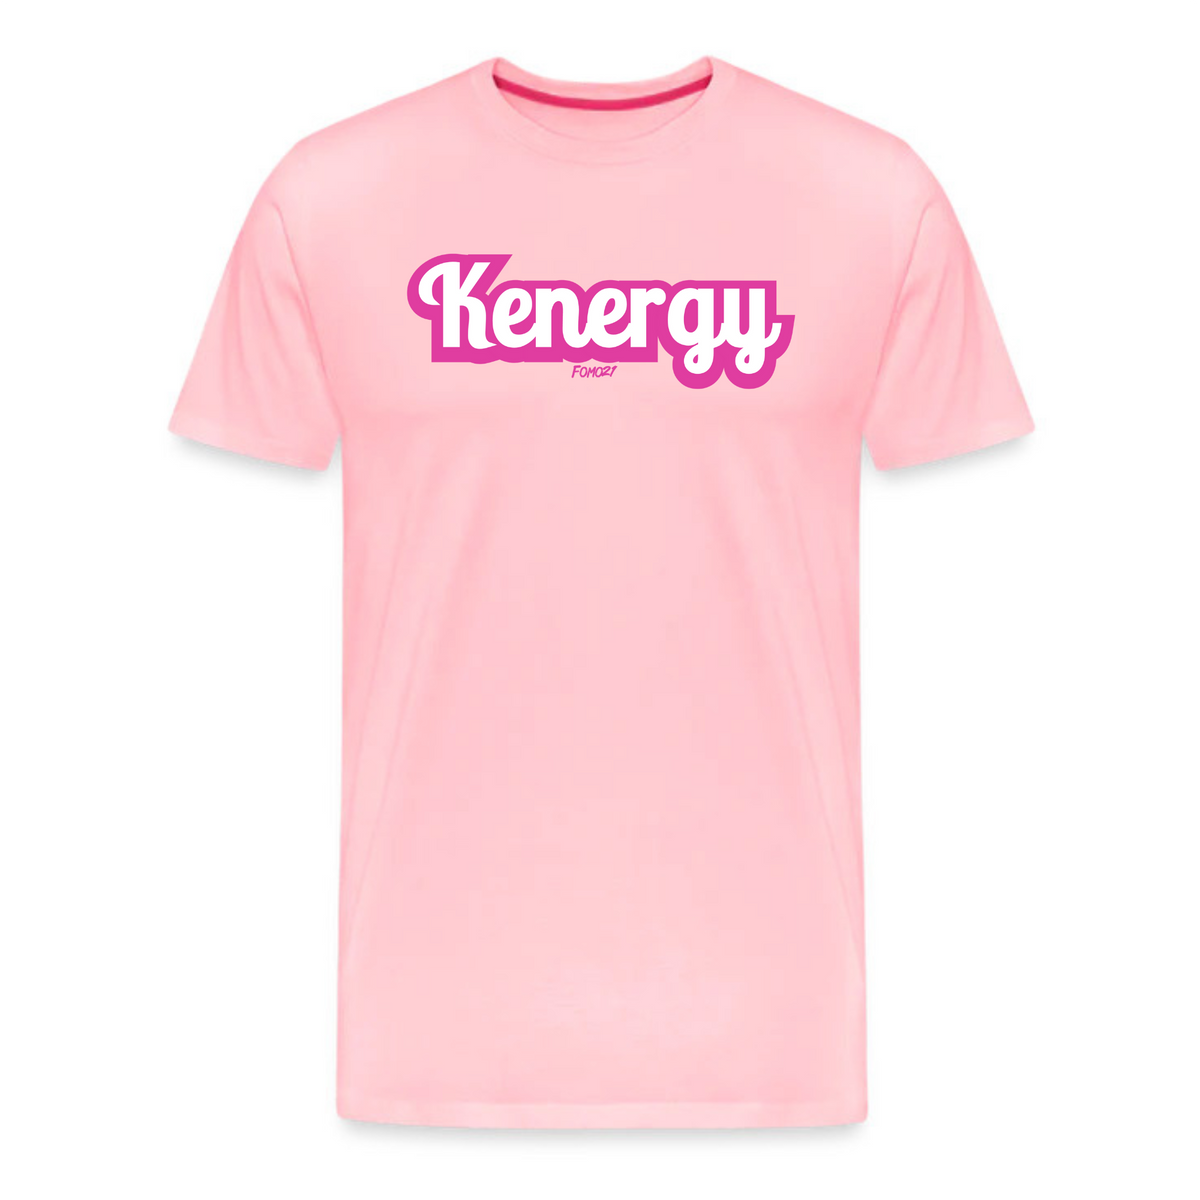 Kenergy Bitcoin T-Shirt - fomo21